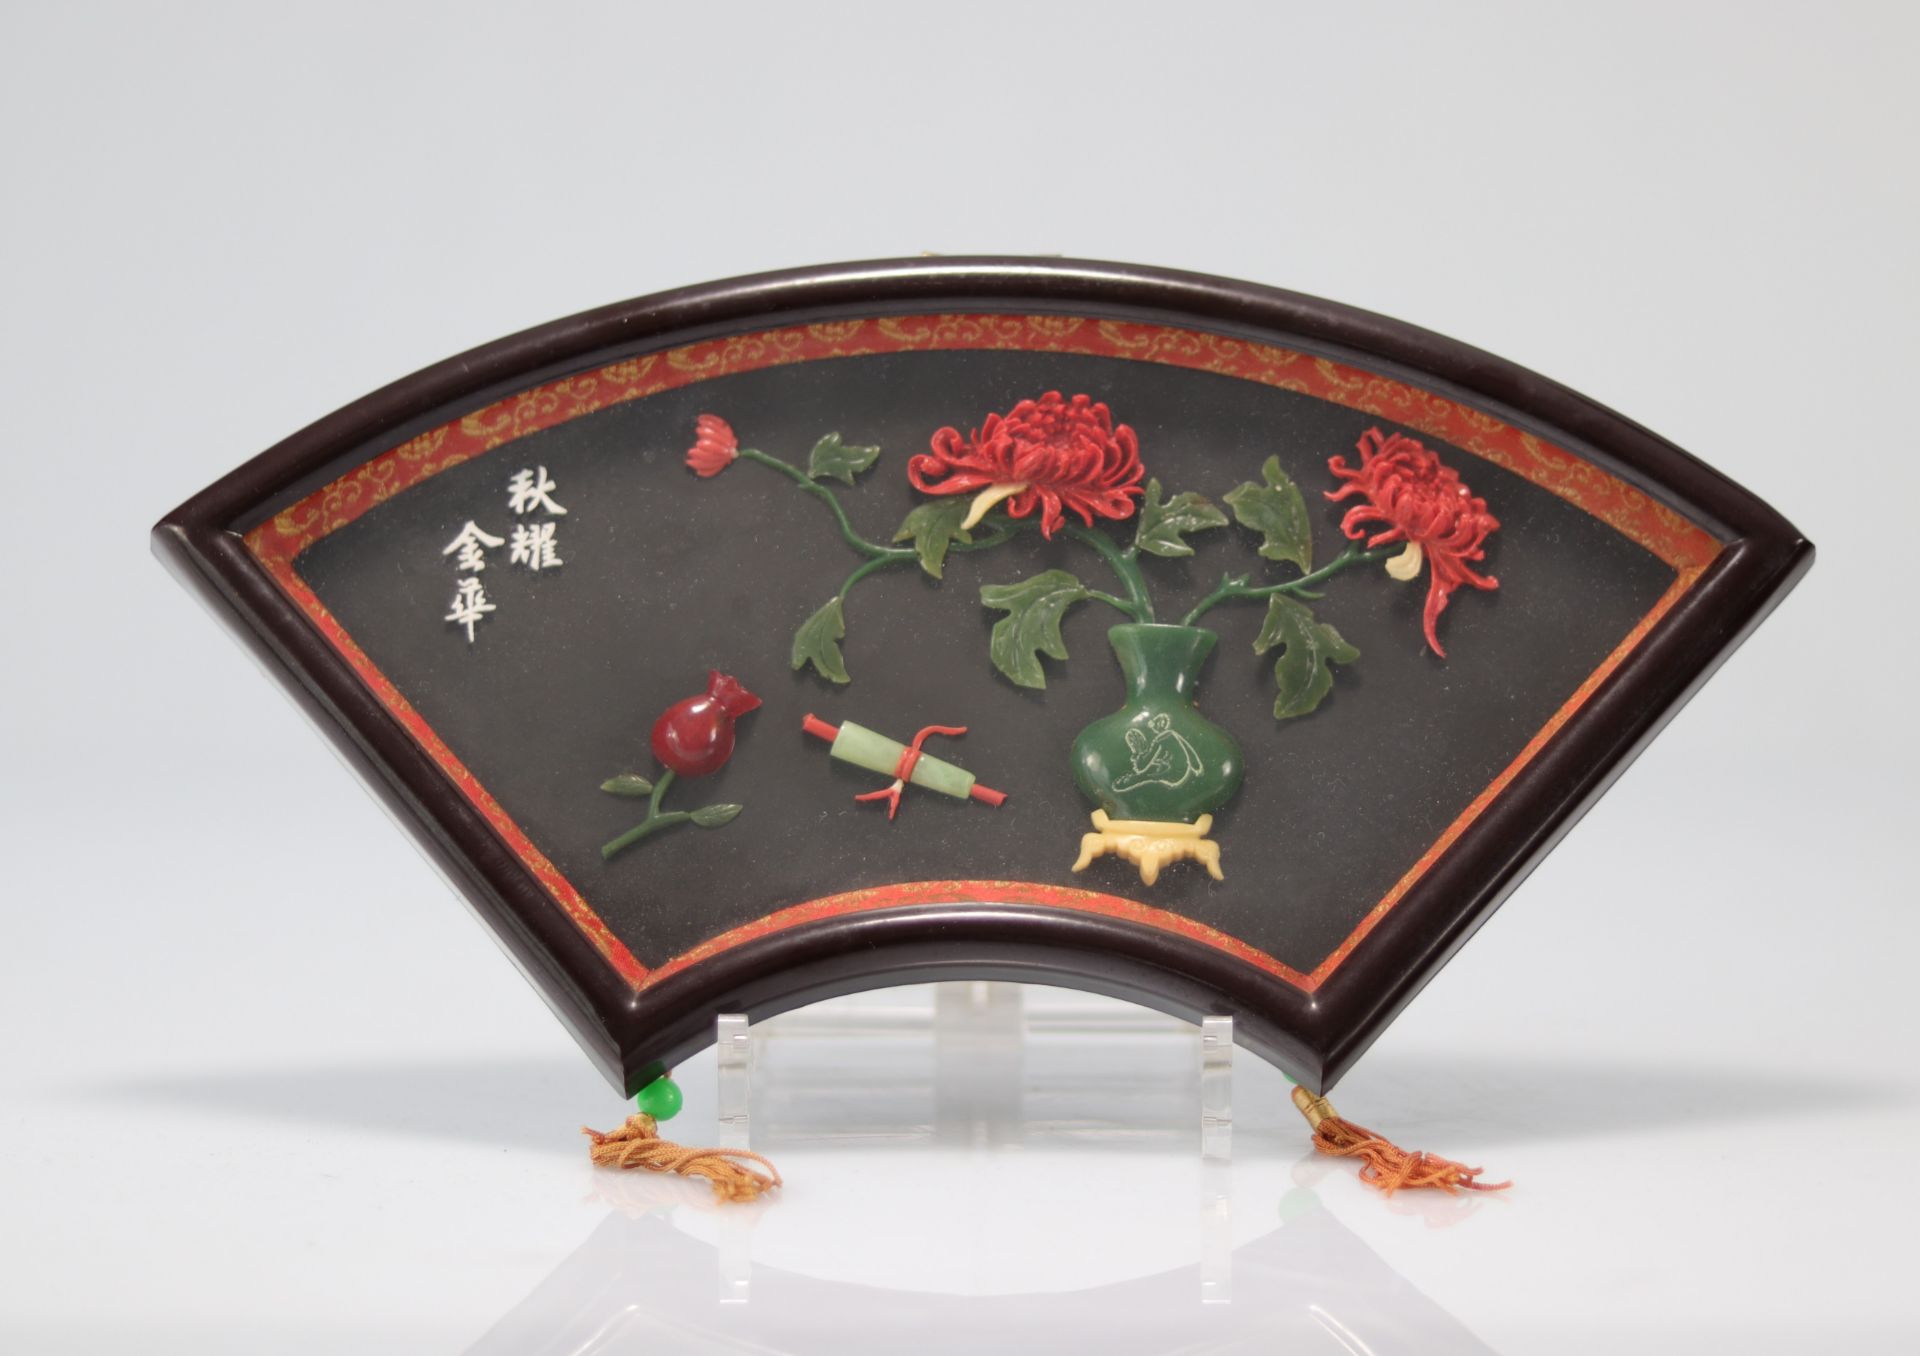 China - jade fan decoration, hard stone coral - - Image 4 of 4